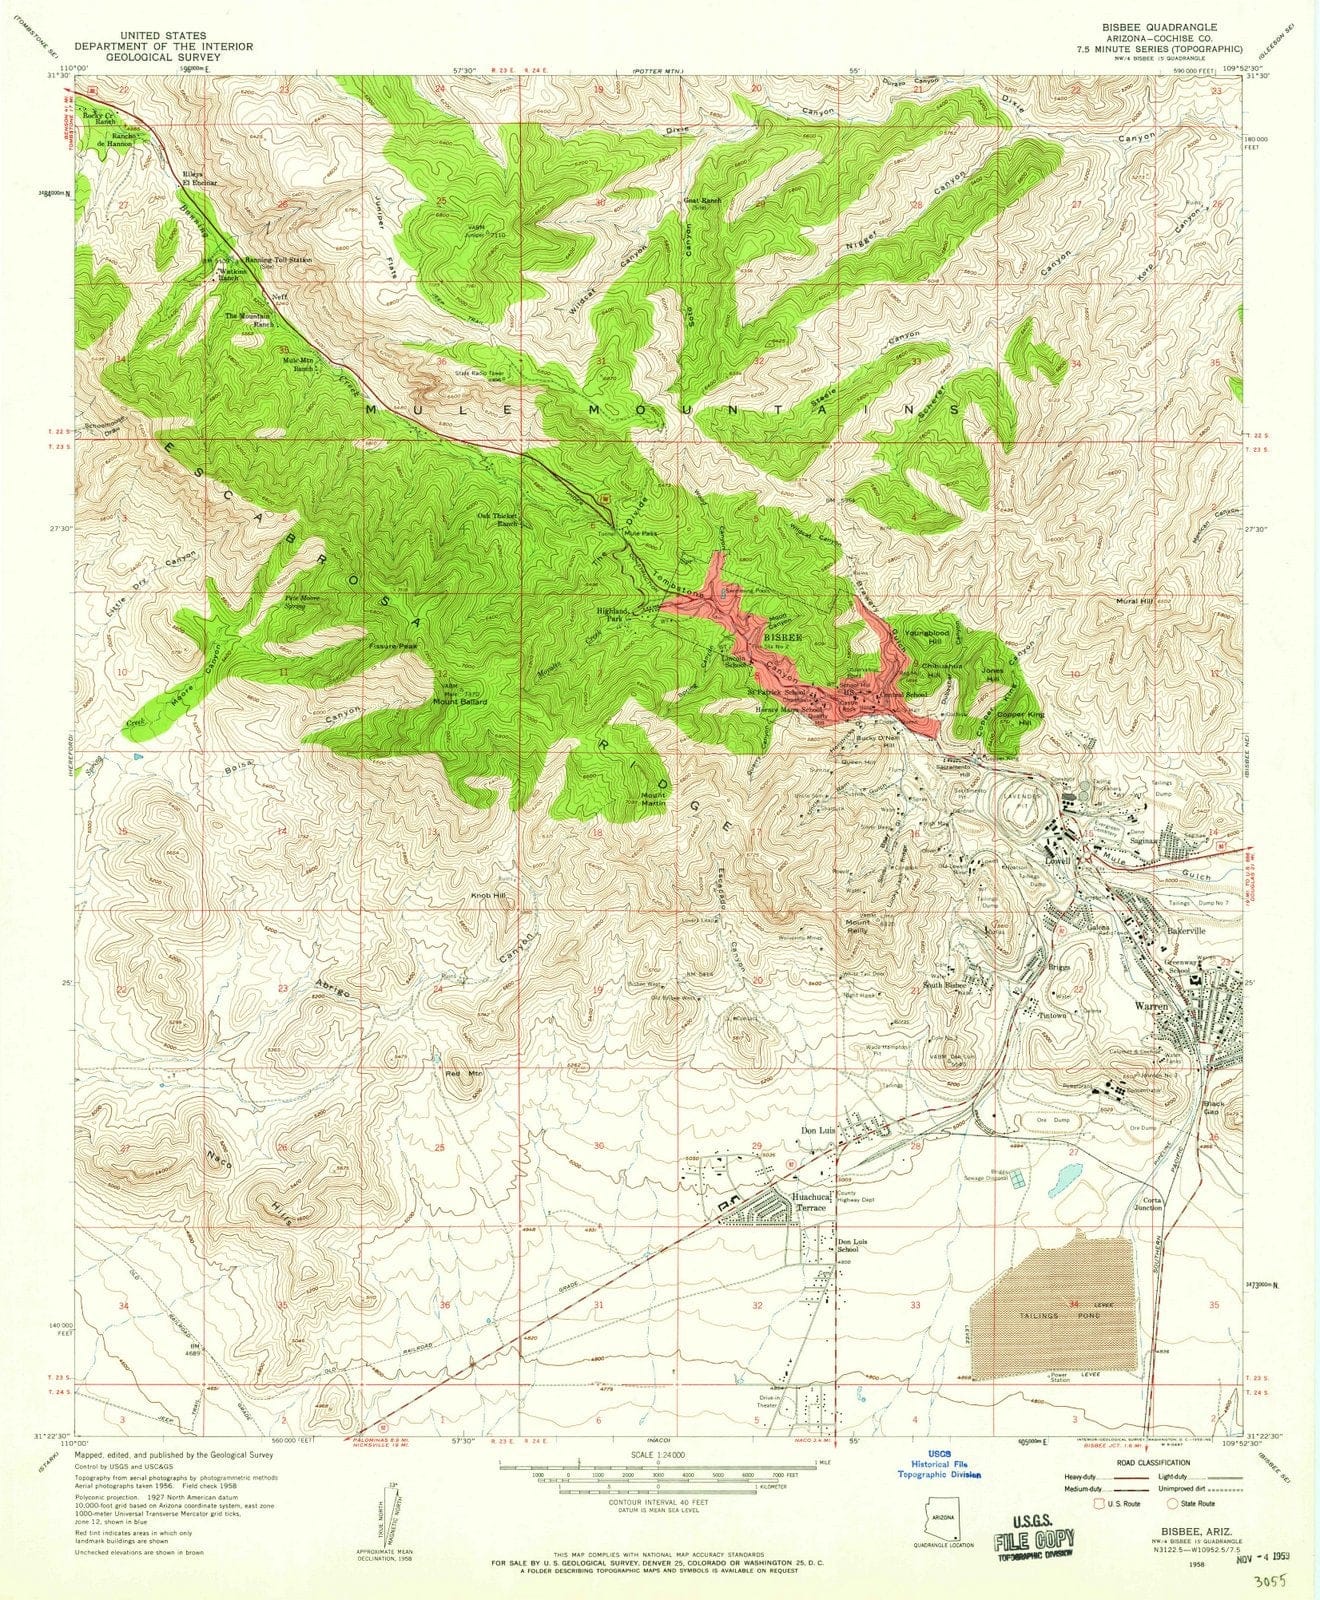 1958 Bisbee, AZ - Arizona - USGS Topographic Map v3